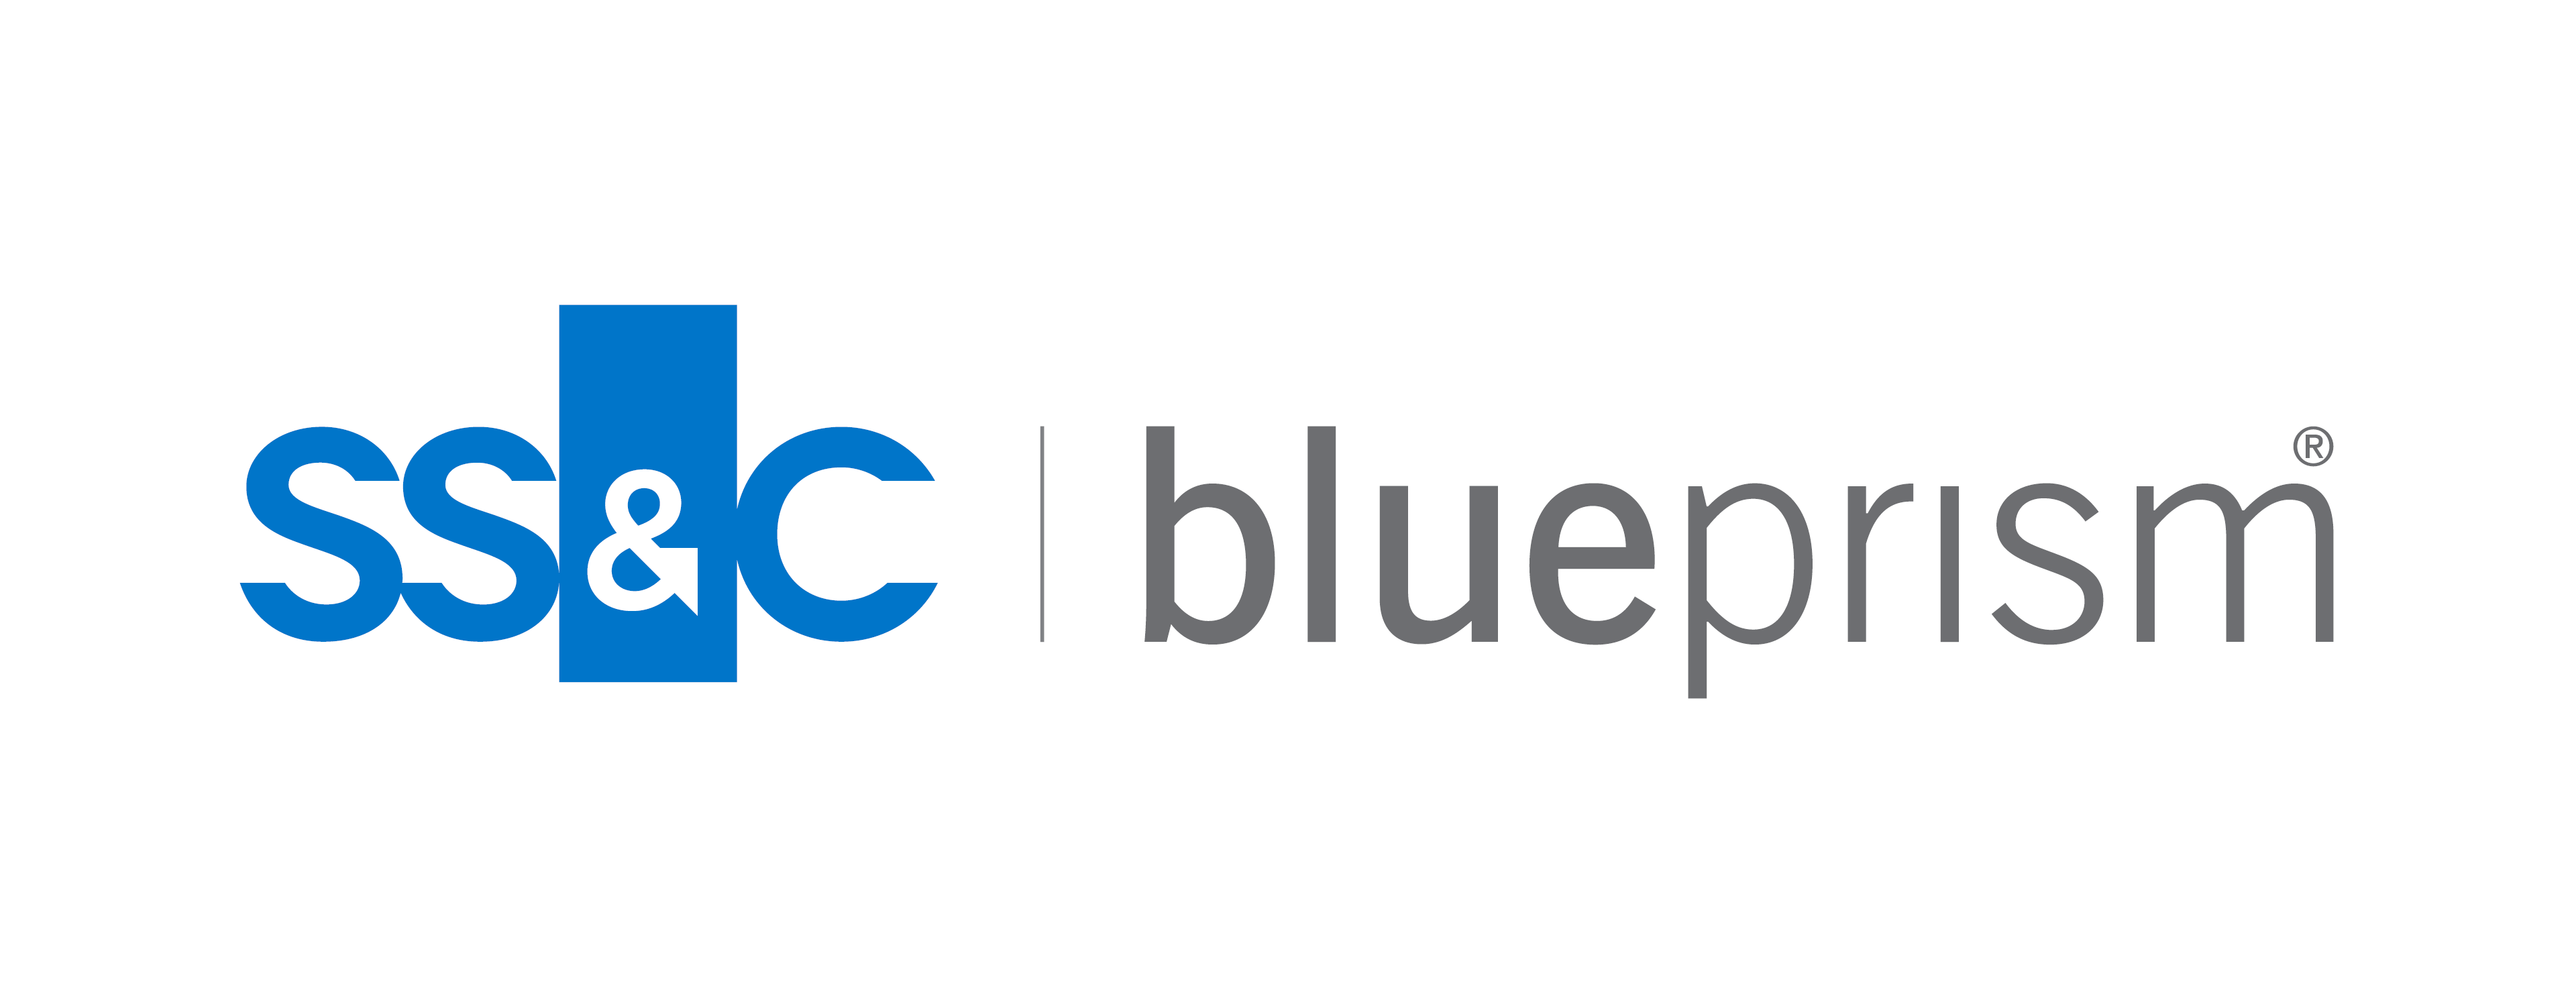 El logo de Blueprism